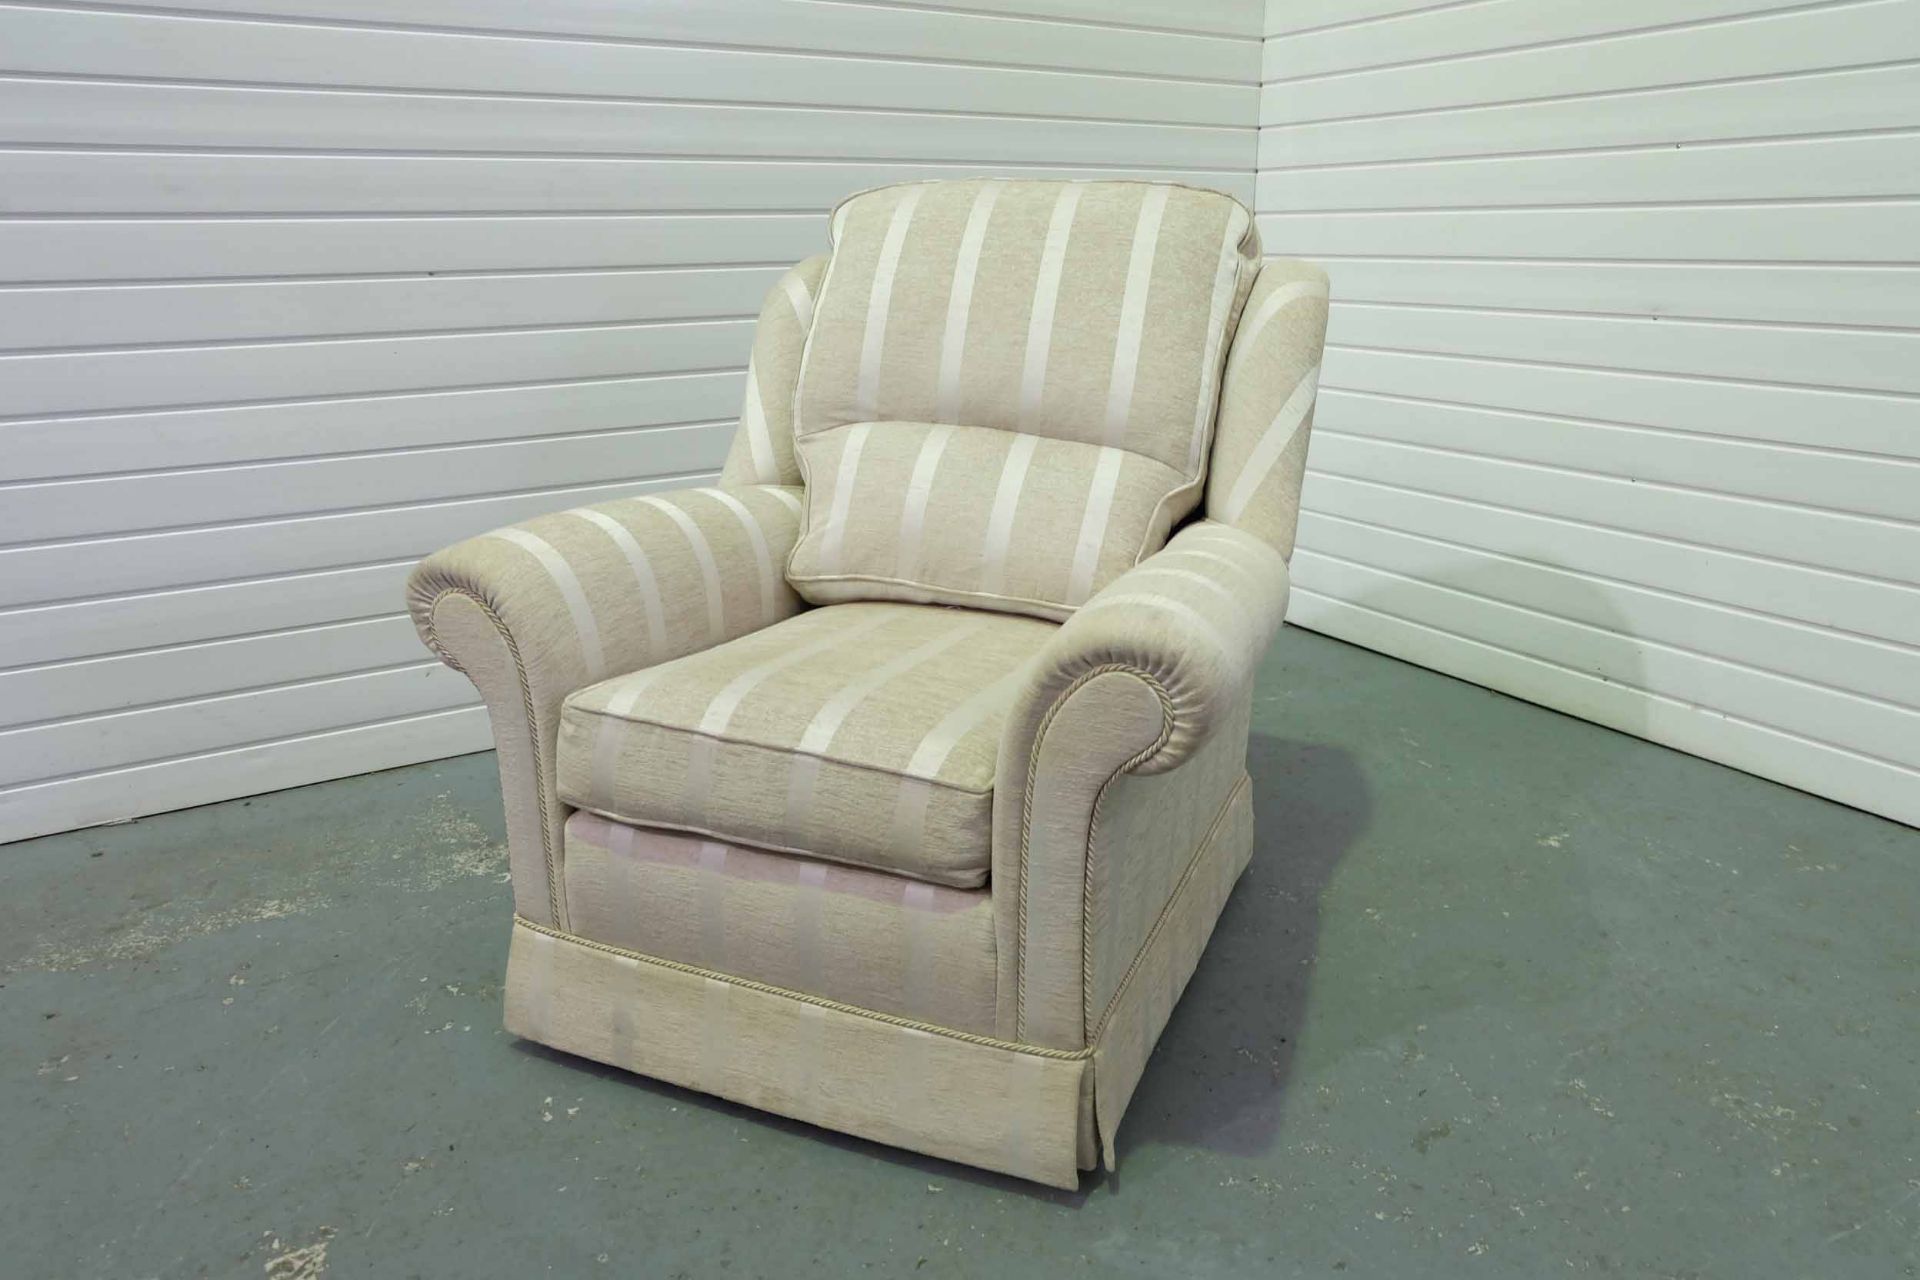 Steed Upholstery 'Hamilton' Range Fully Handmade Chair. With Valance.